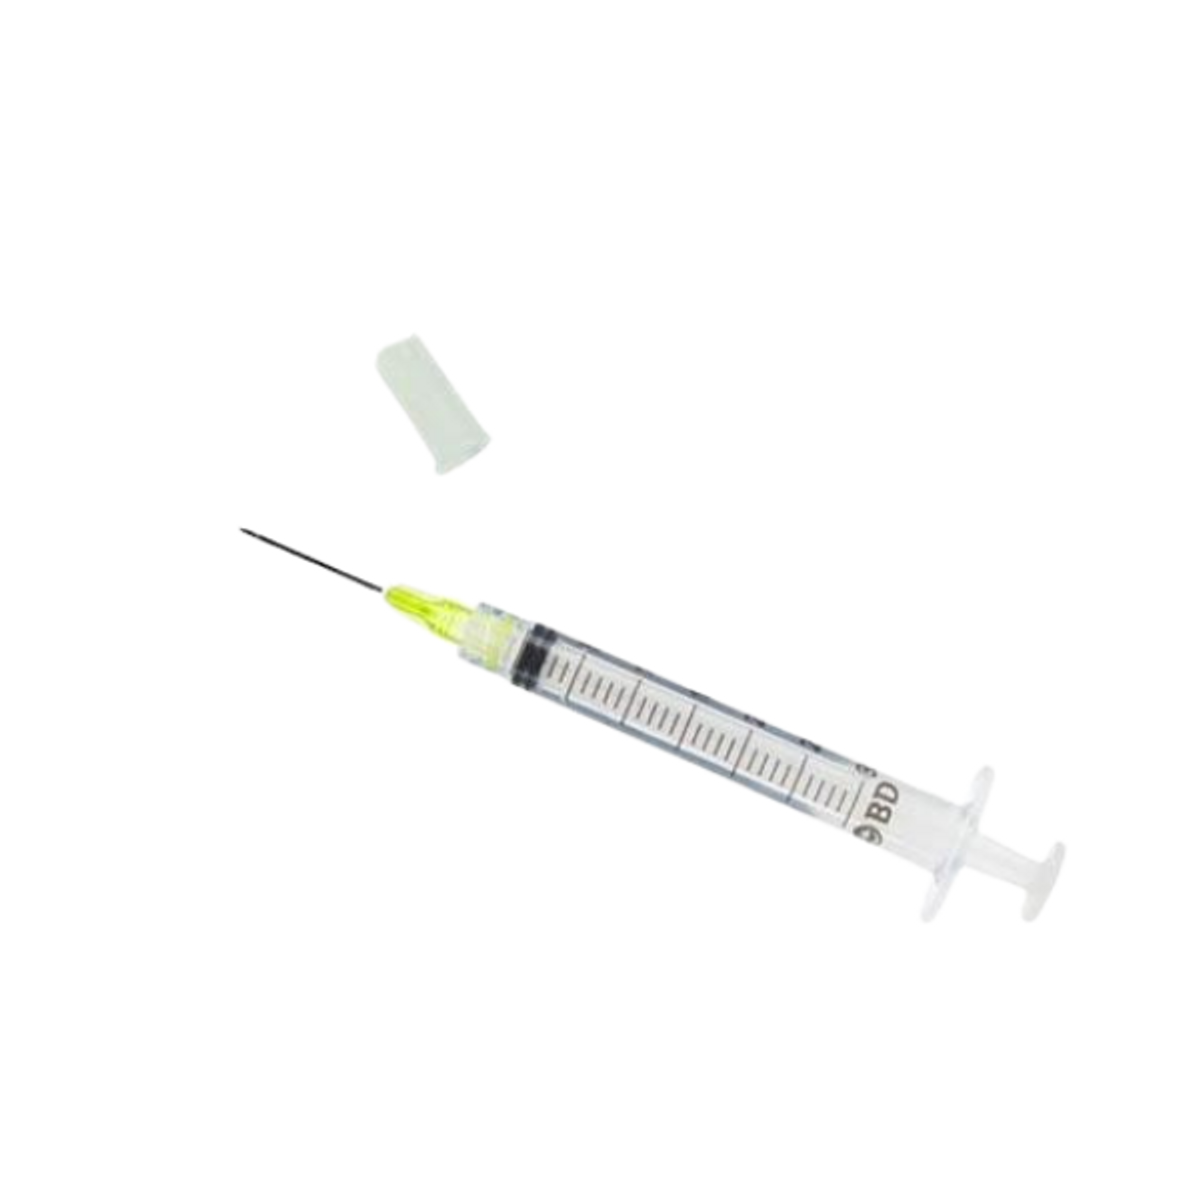 BD 3 Ml Syringes & Needles